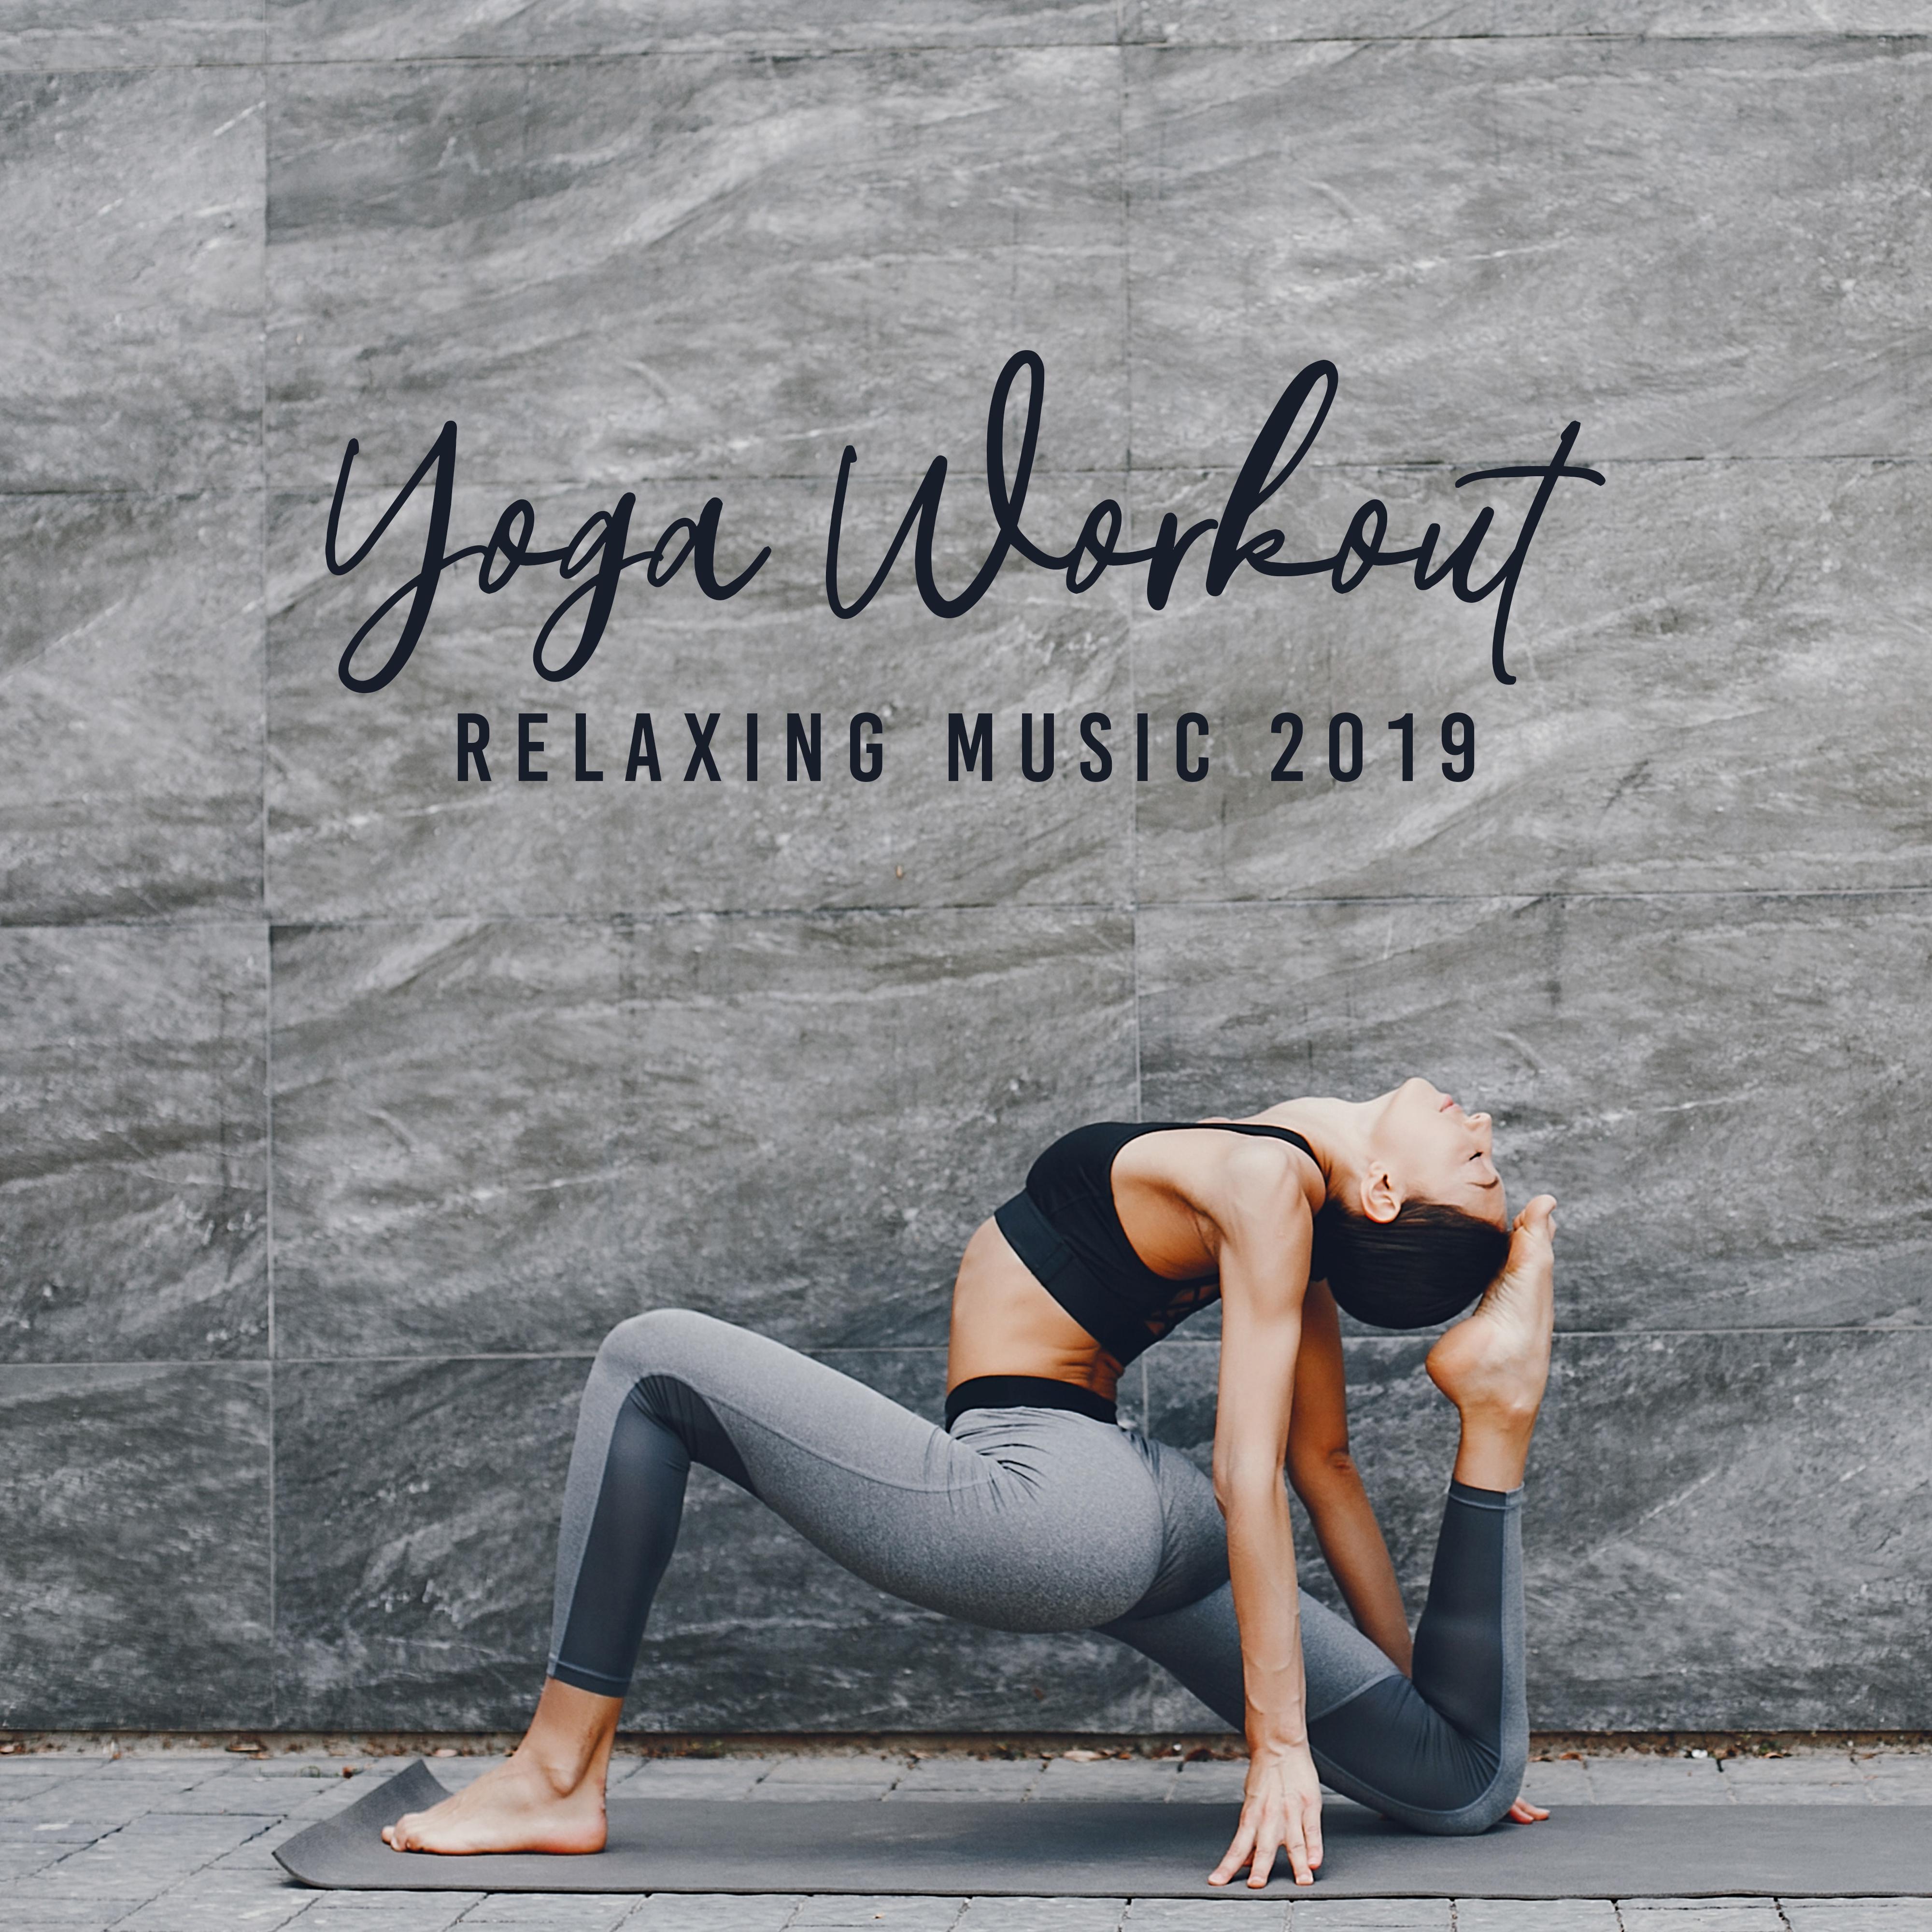 Yoga Workout Relaxing Music 2019